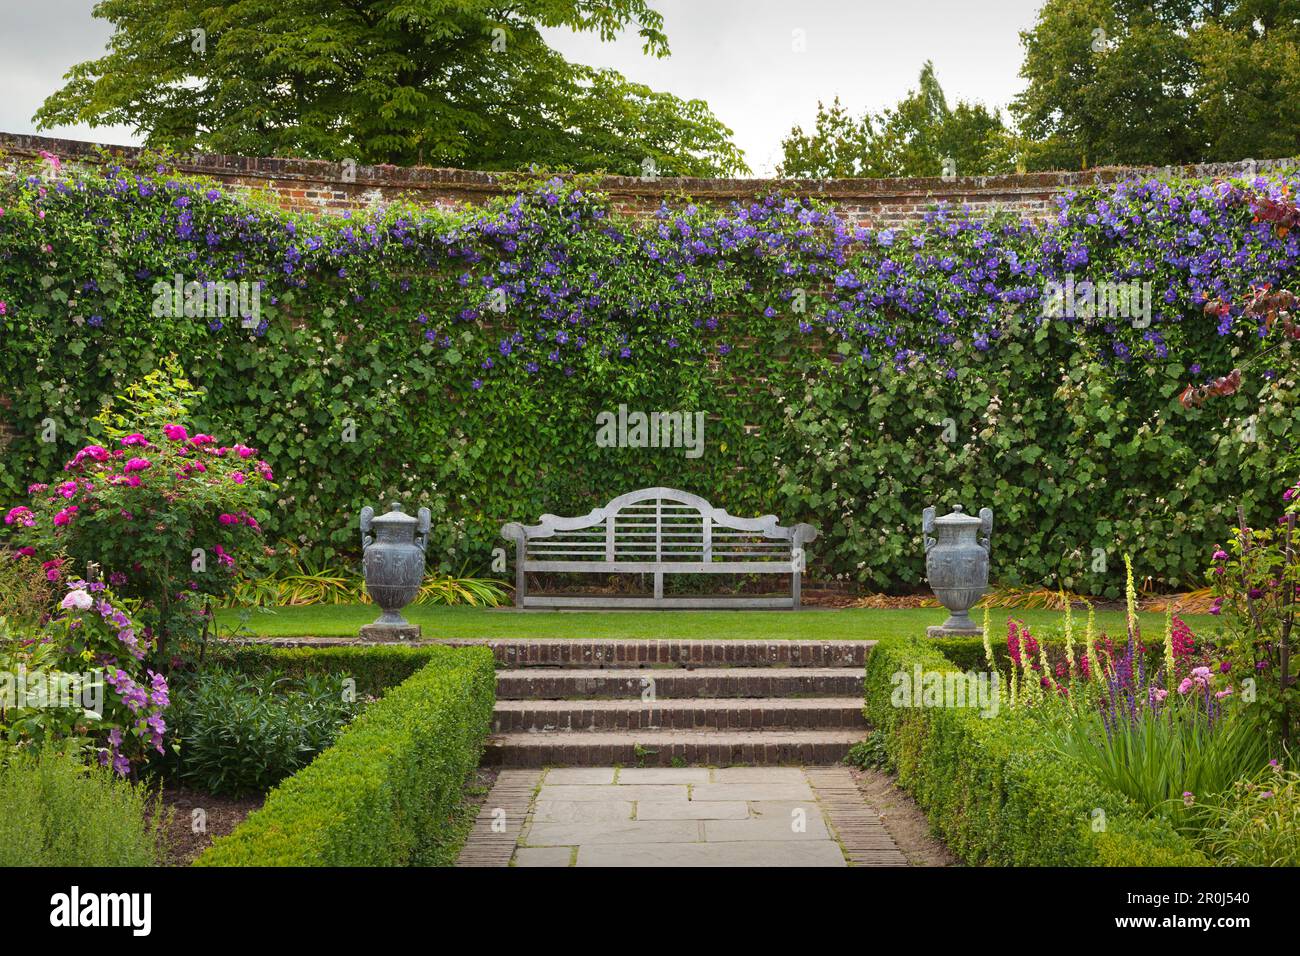 Sissinghurst castle garden garden bench hi-res stock photography and images  - Alamy